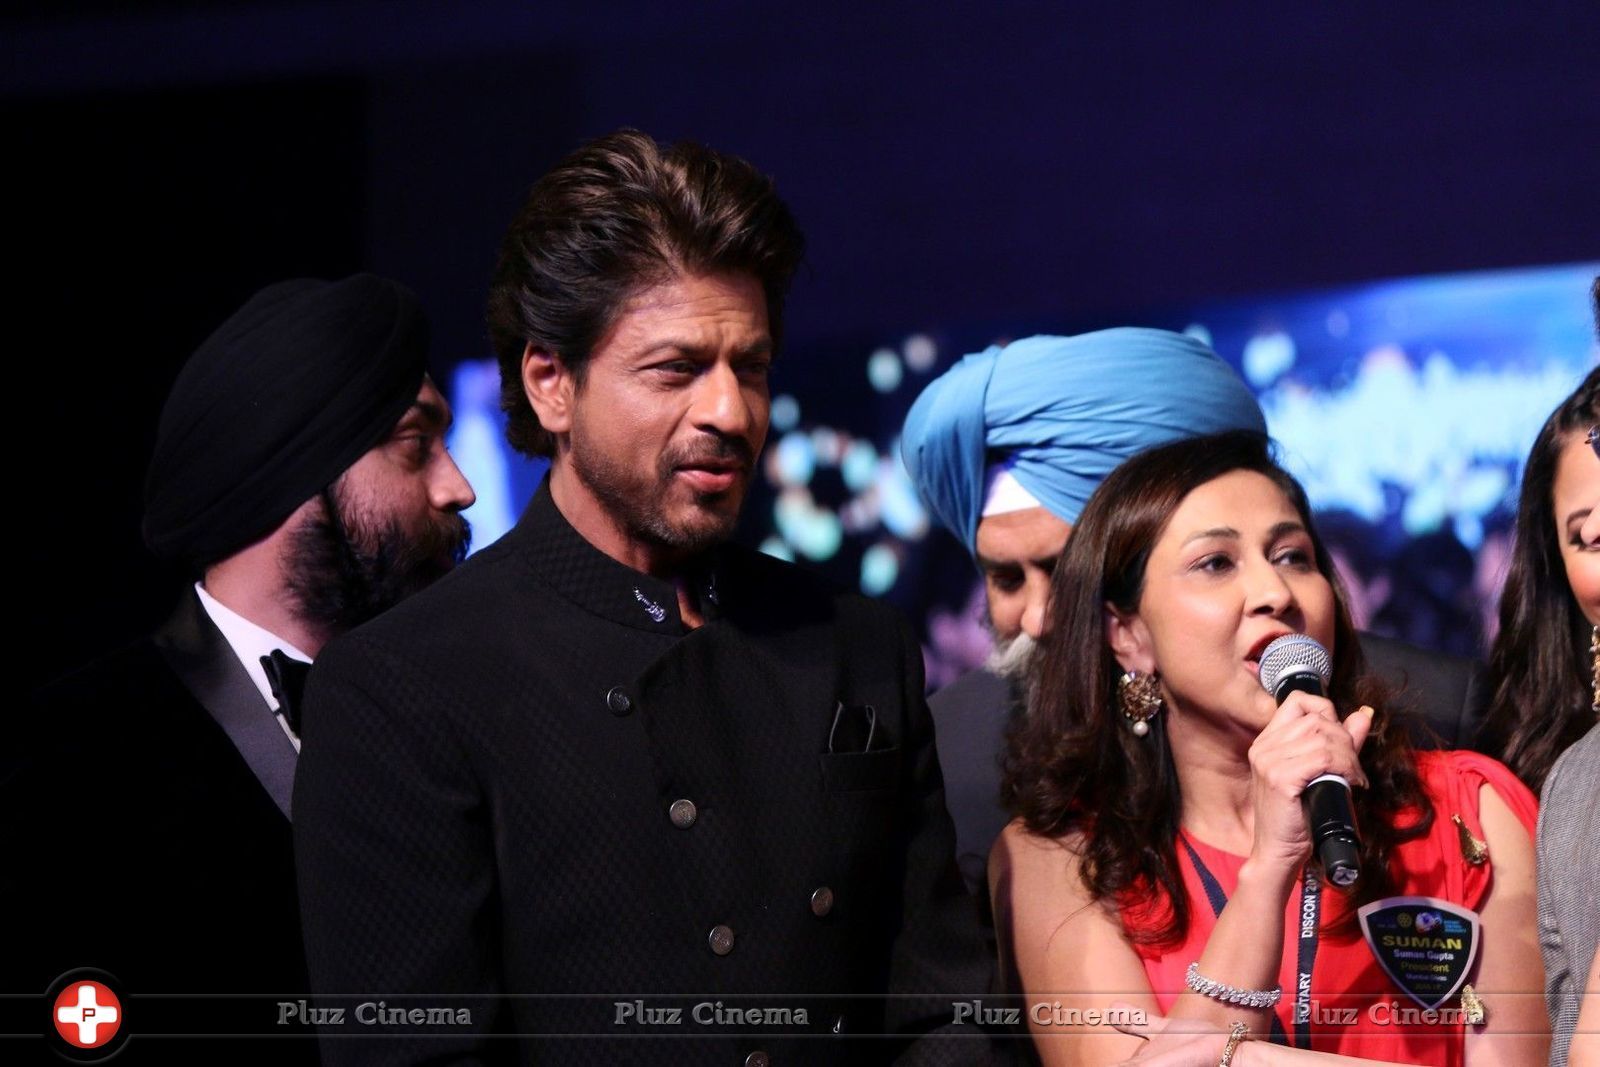 Shah Rukh Khan and Alia Bhatt At Archhar Kochar Fashion Show Pictures | Picture 1458654